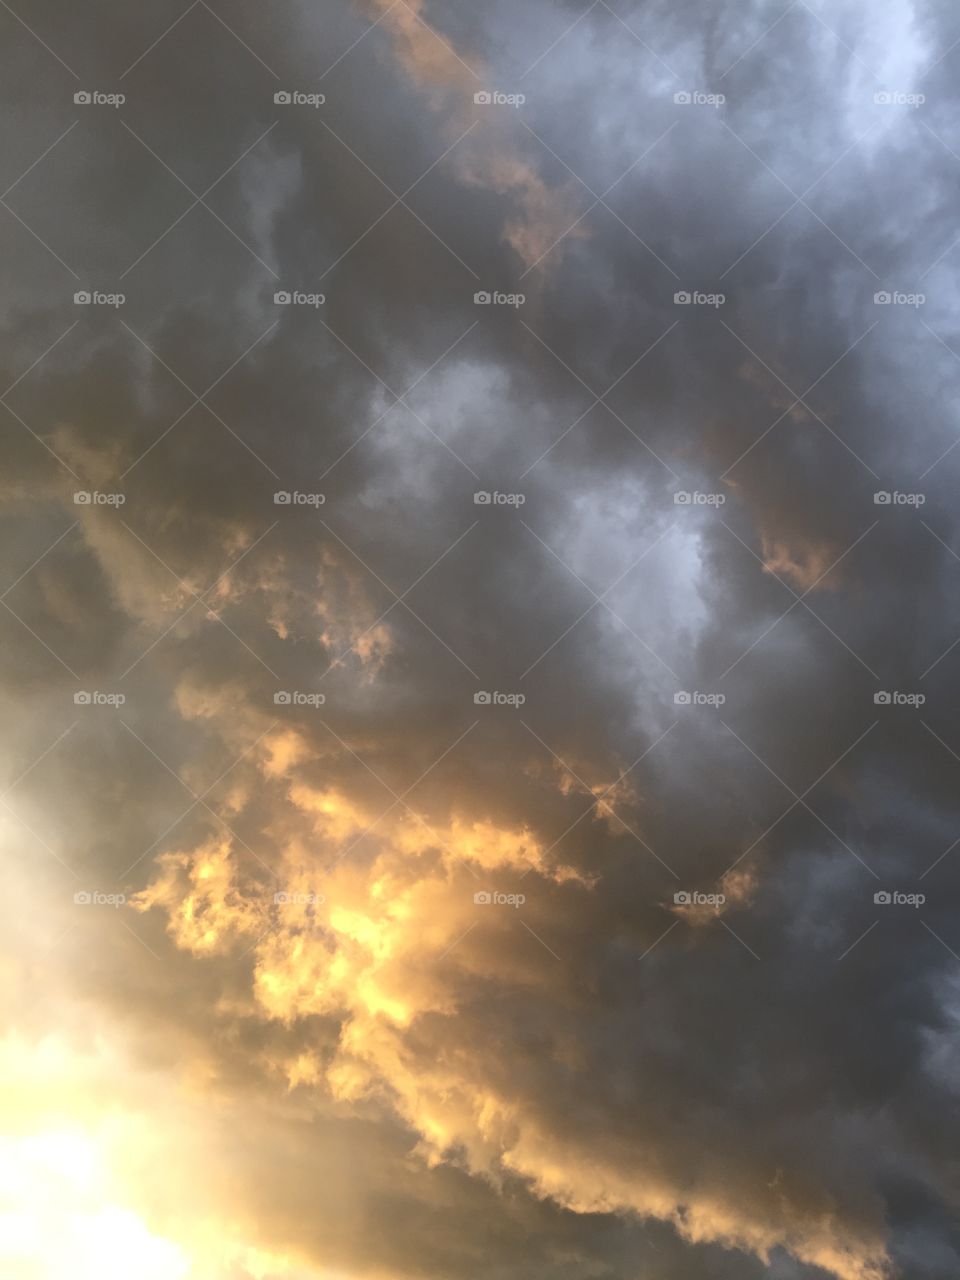 Cloud perspective 